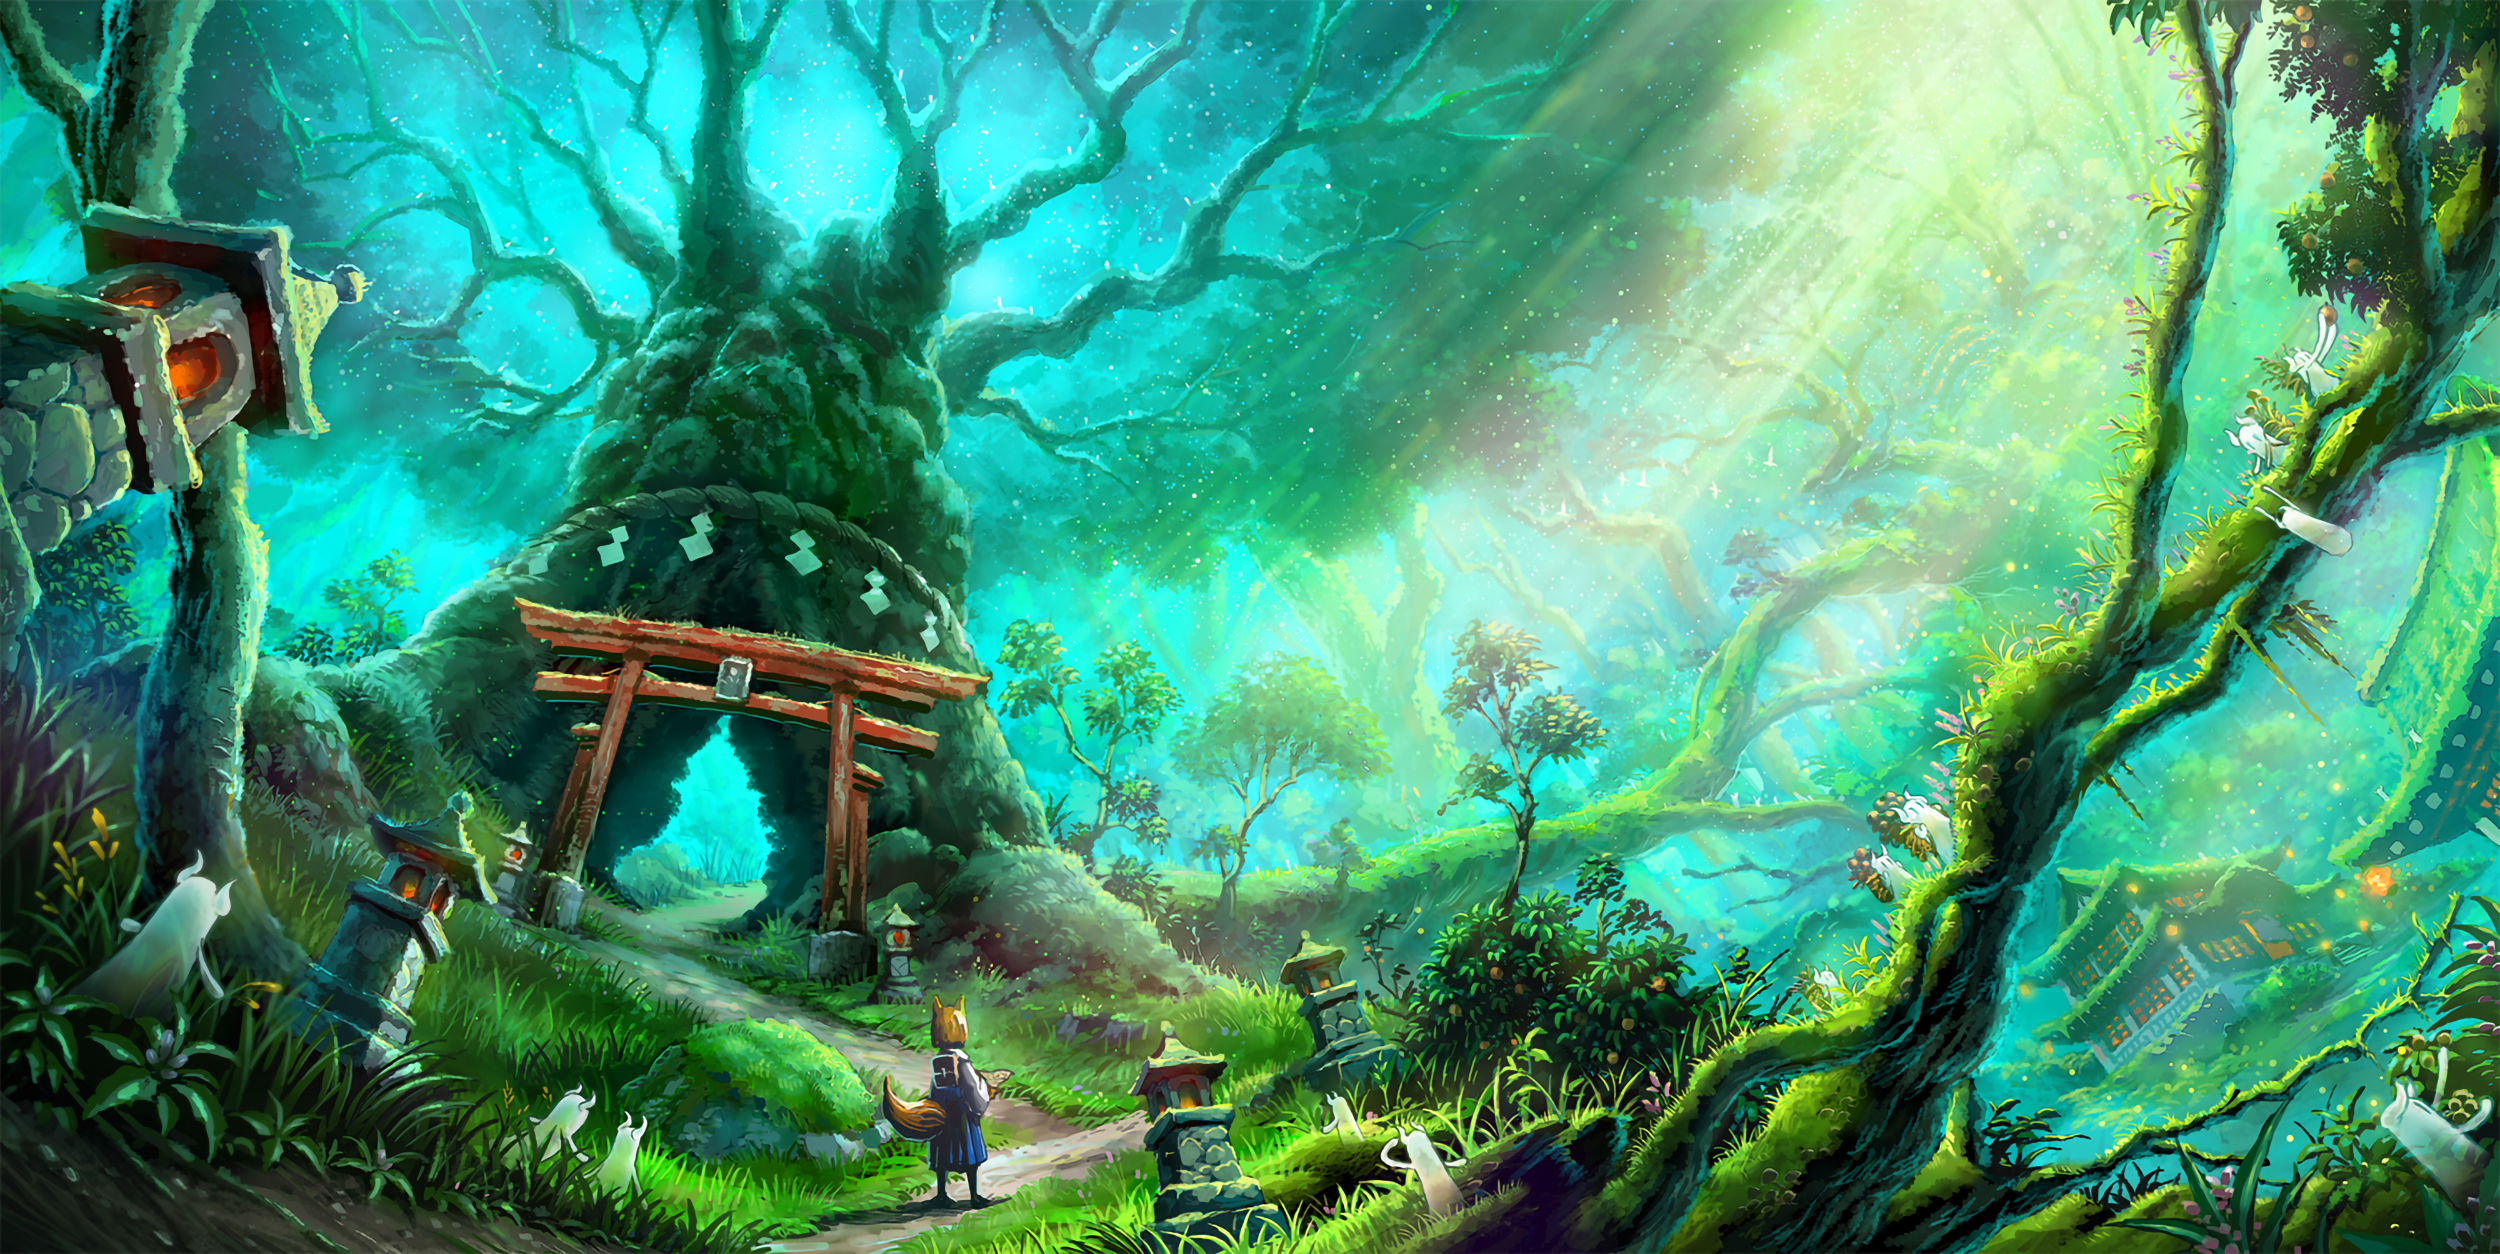 Anime 2500x1254 anime landscape nature forest plants trees fantasy art